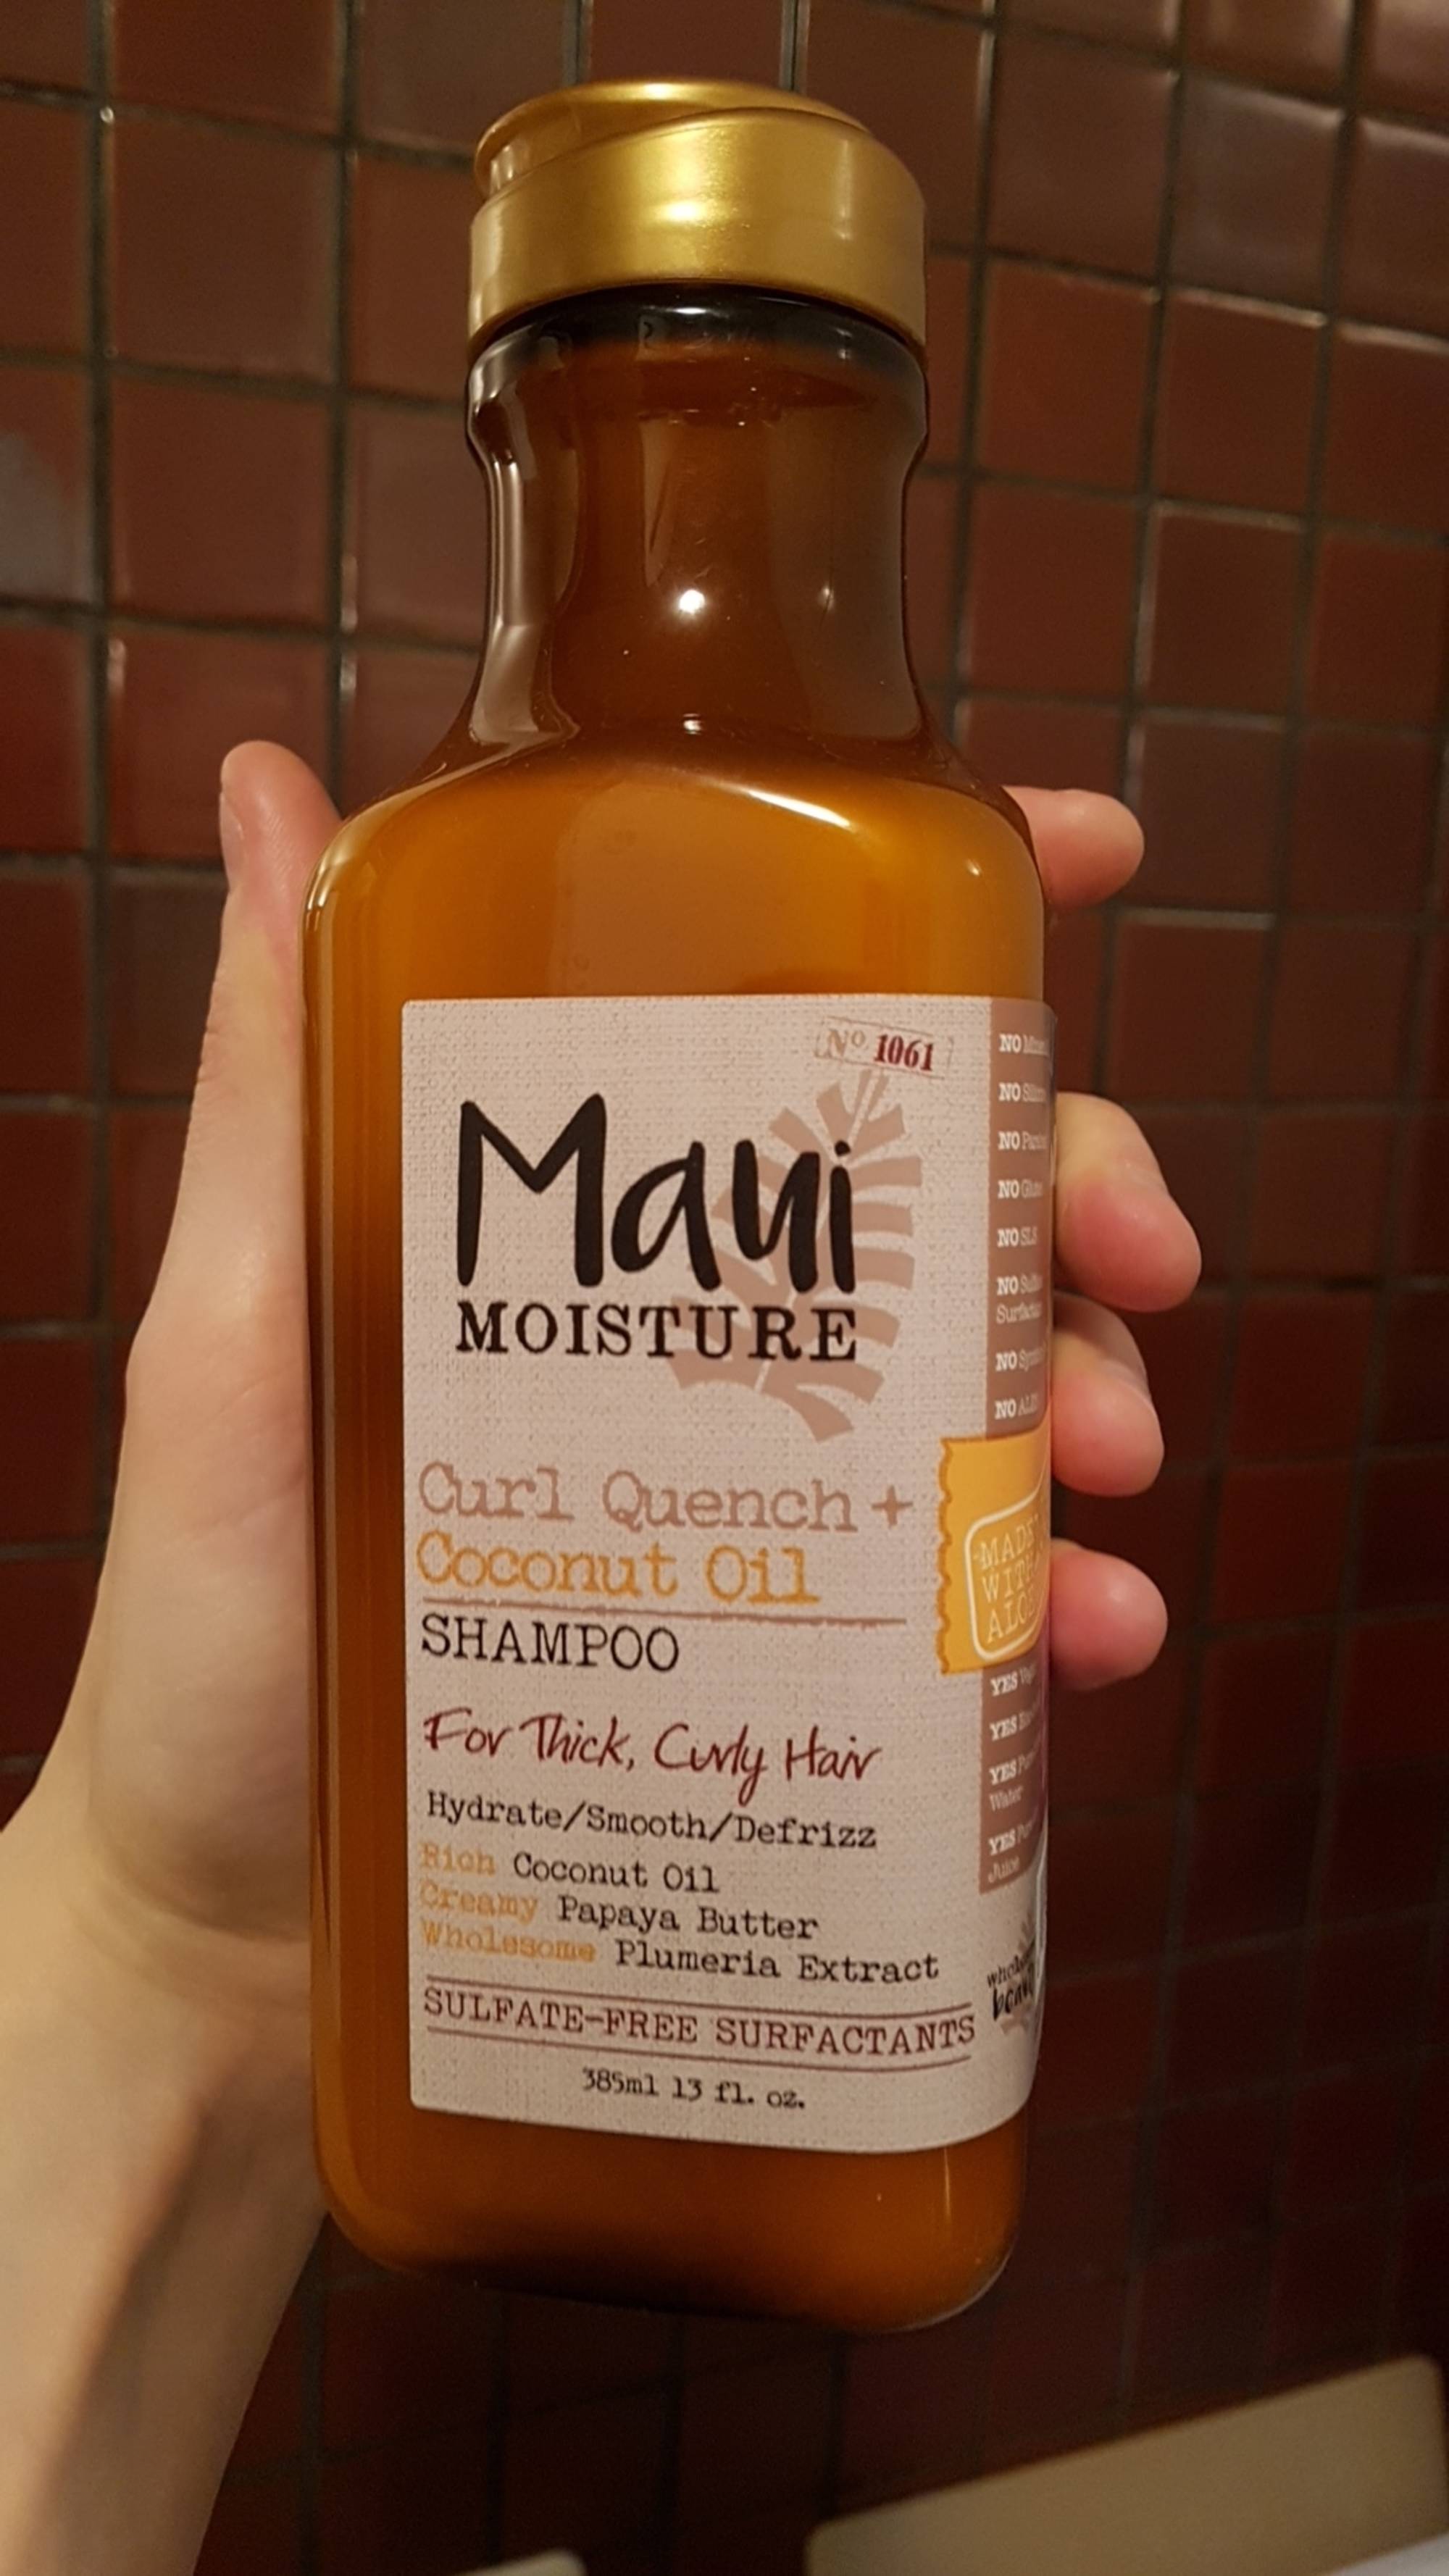 MAUI MOISTURE - Curl quench + coconut oil - Shampoo